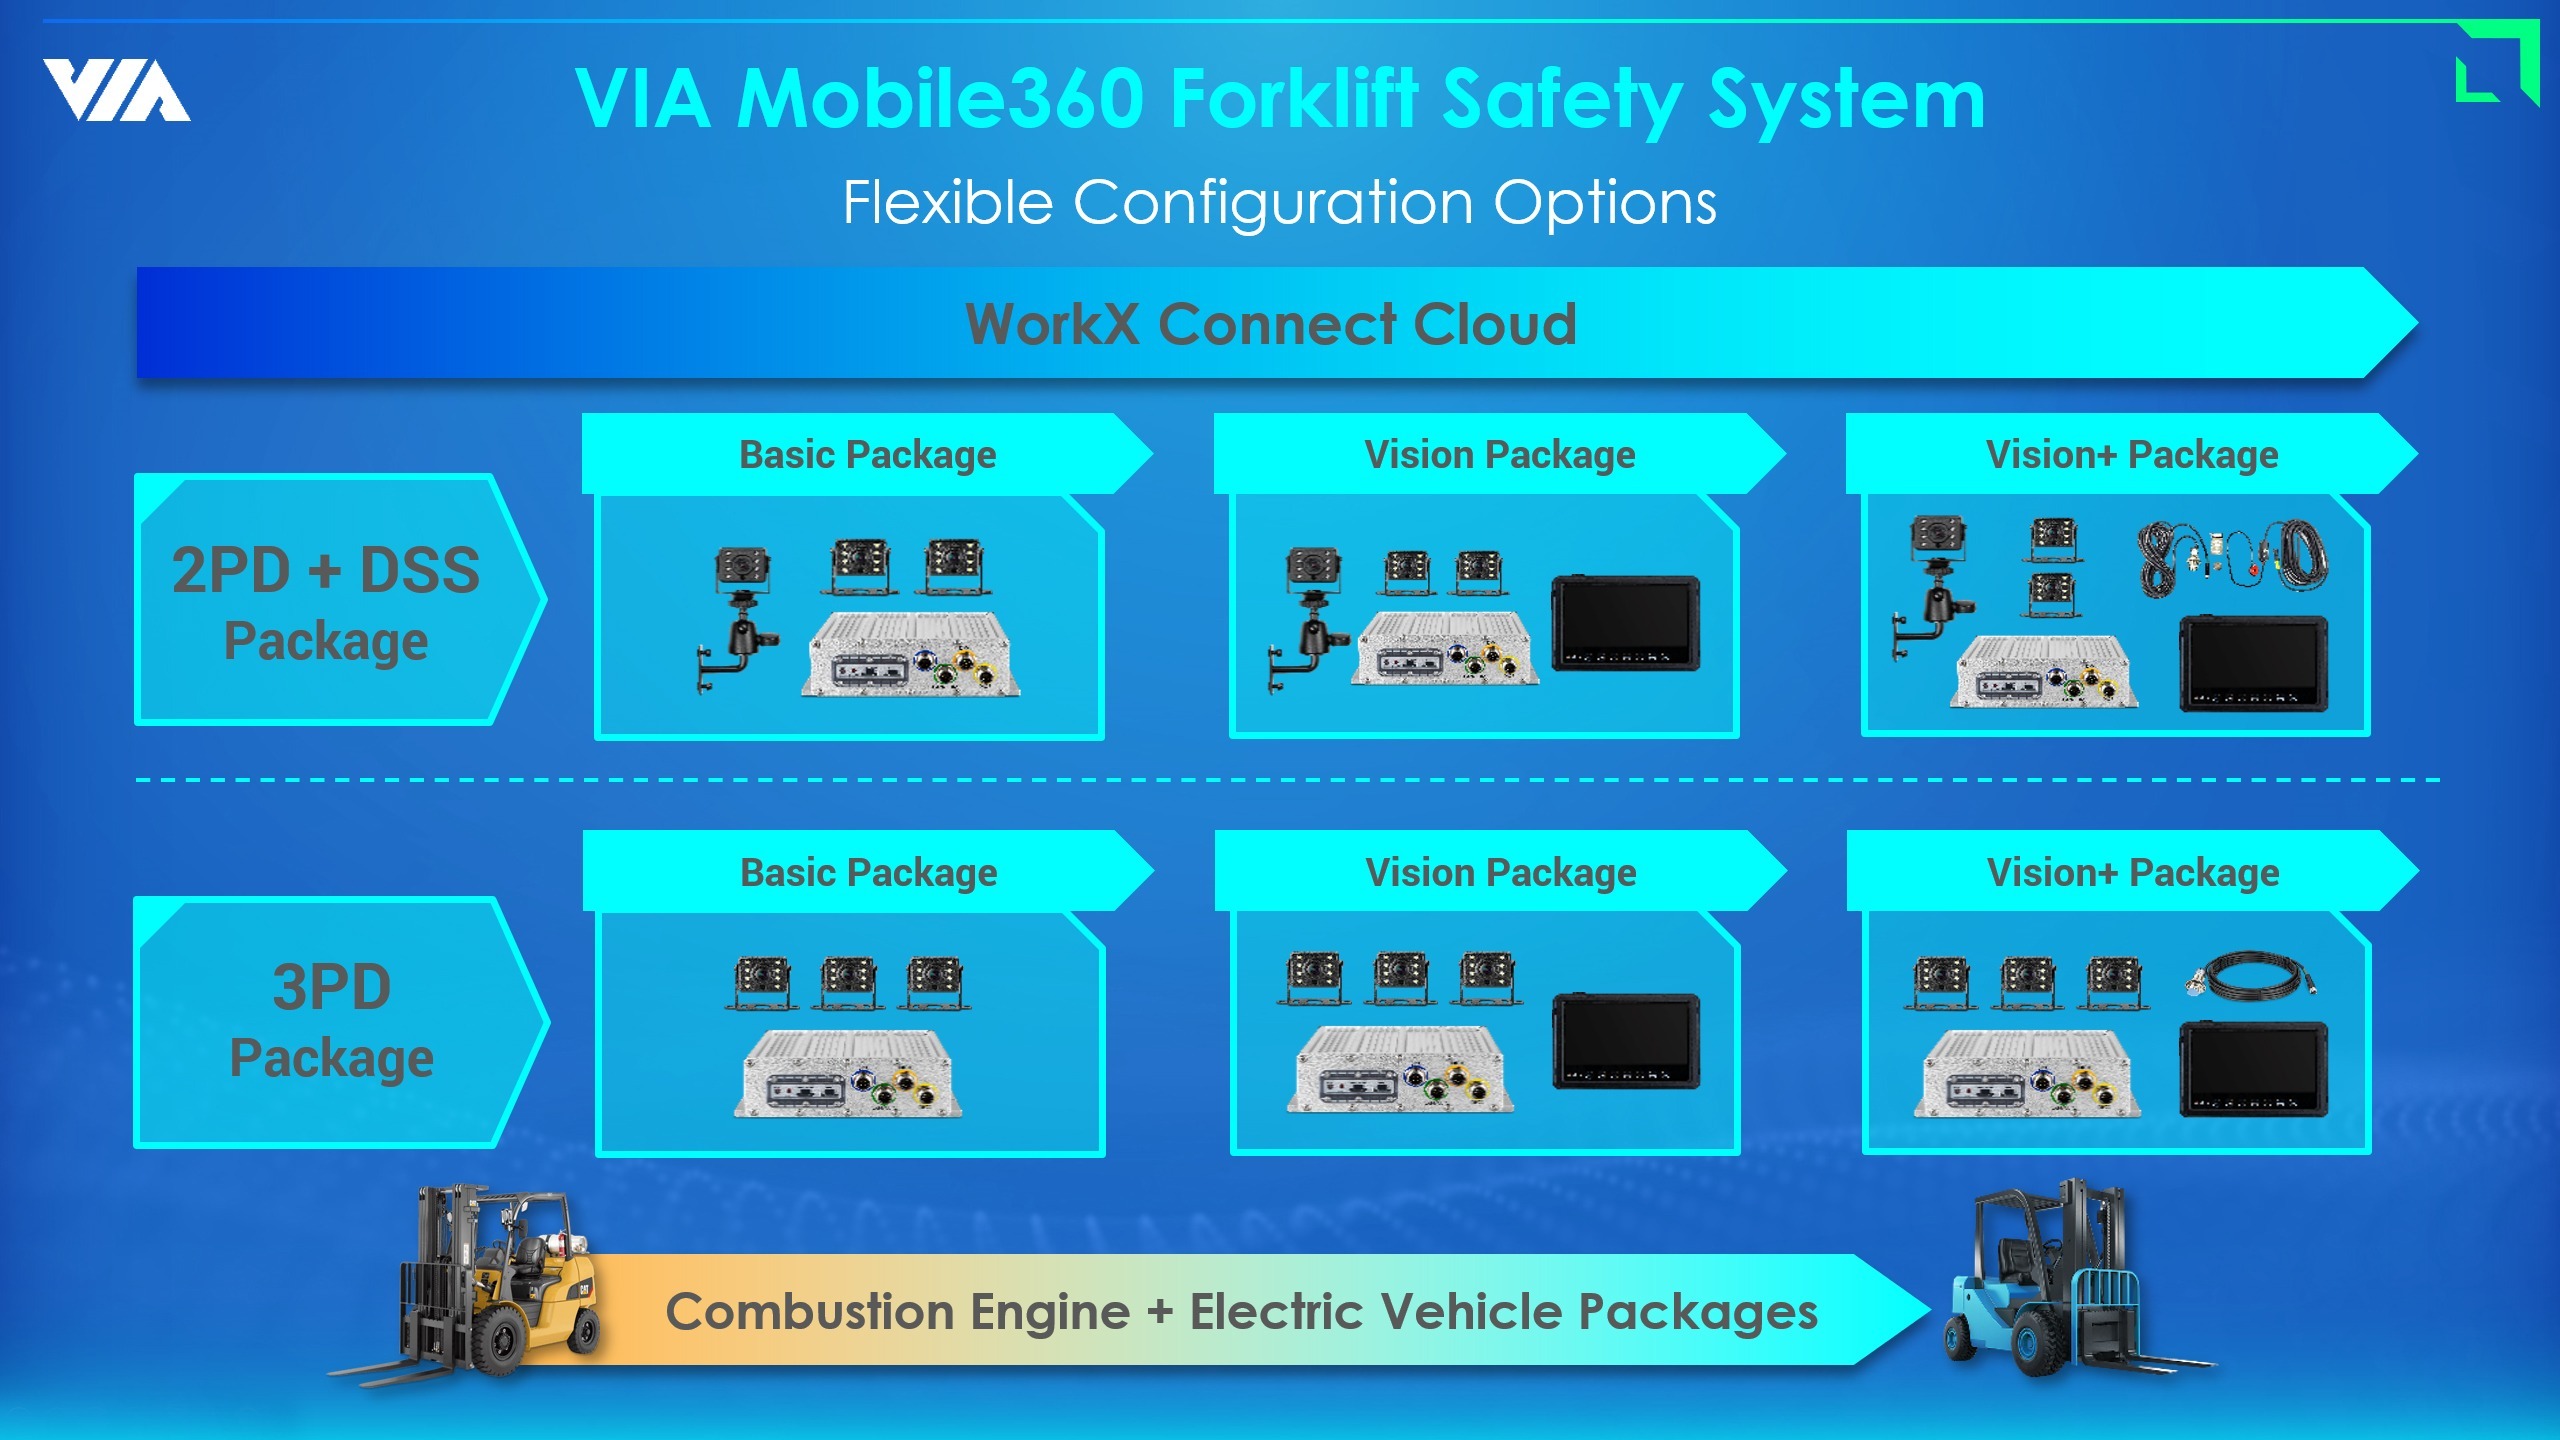 Forklift Safety System innovation